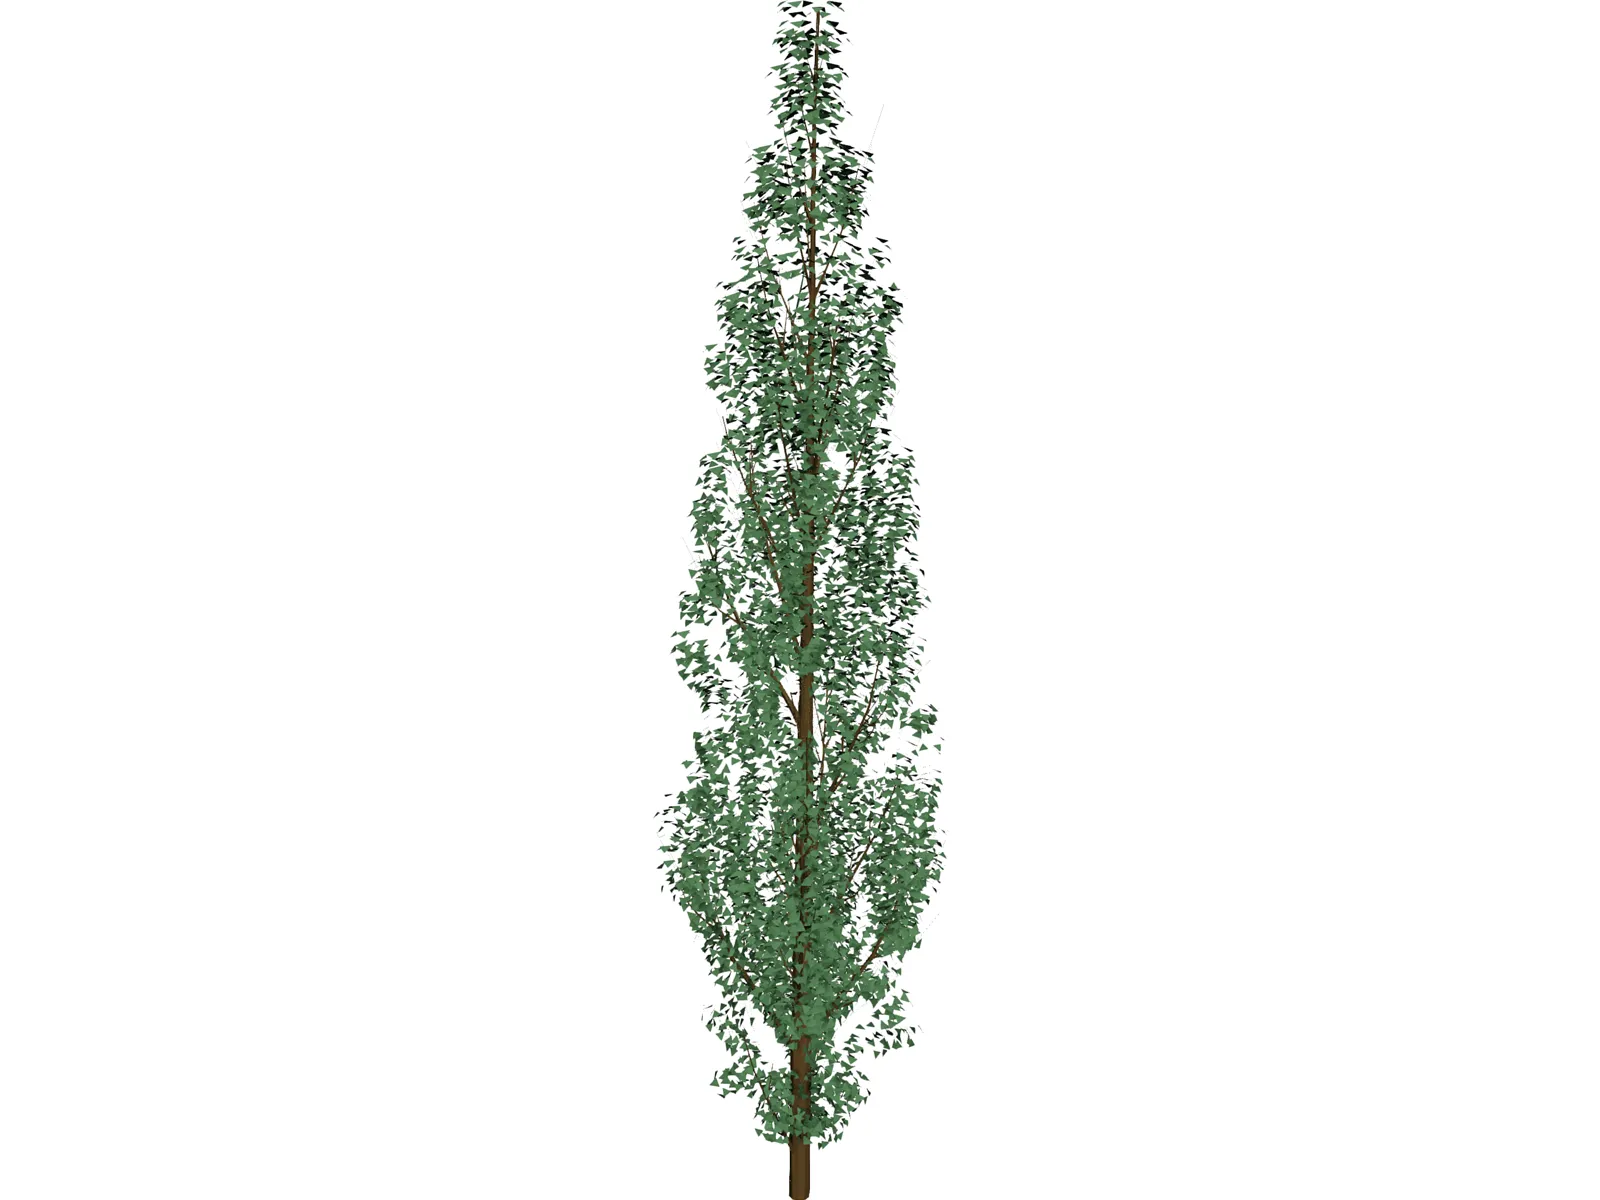 Pine Tree 3D Model